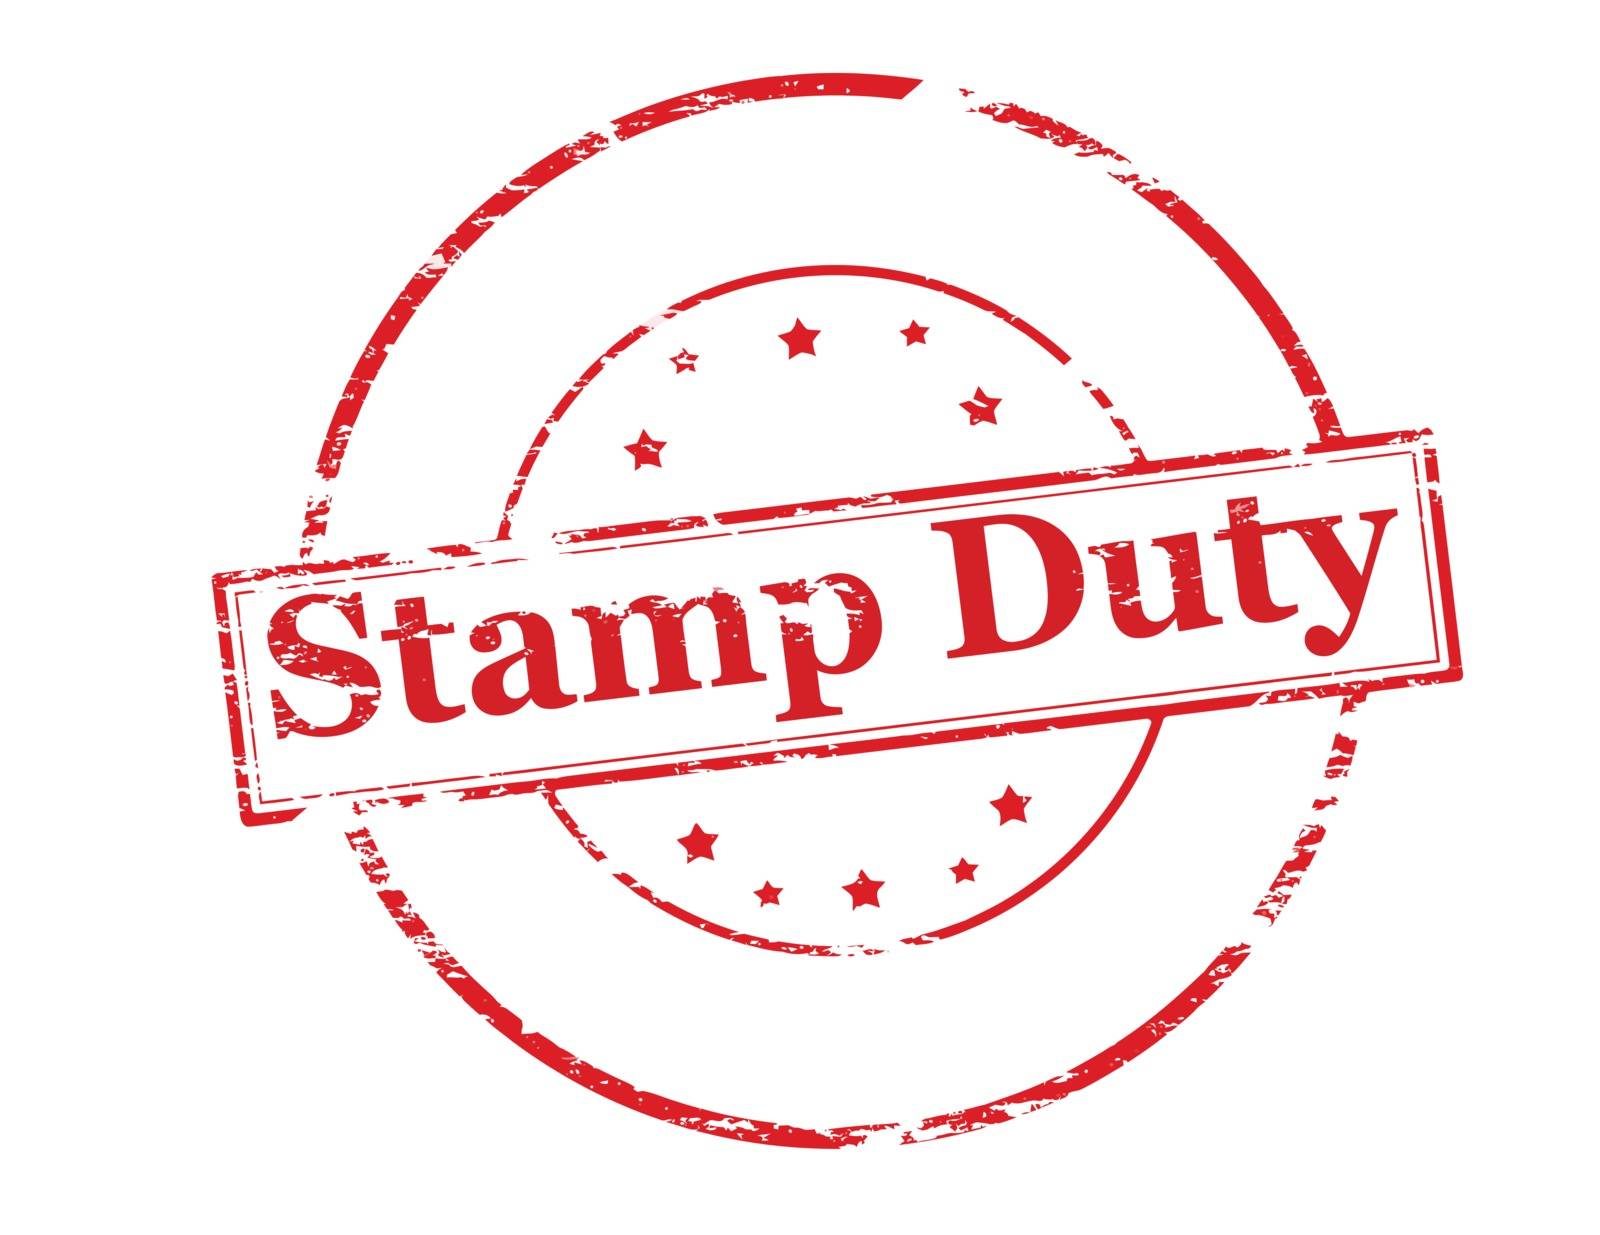 Stamp duty by carmenbobo